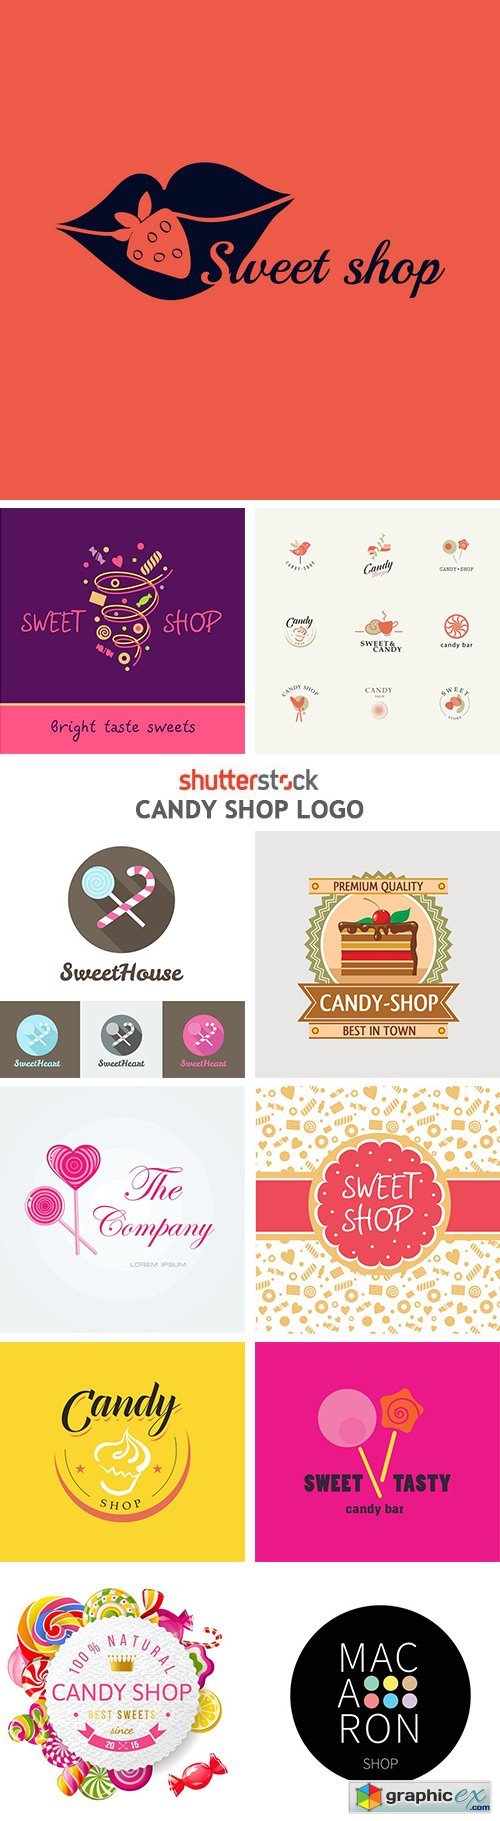 Candy Shop Logo - 25xEPS